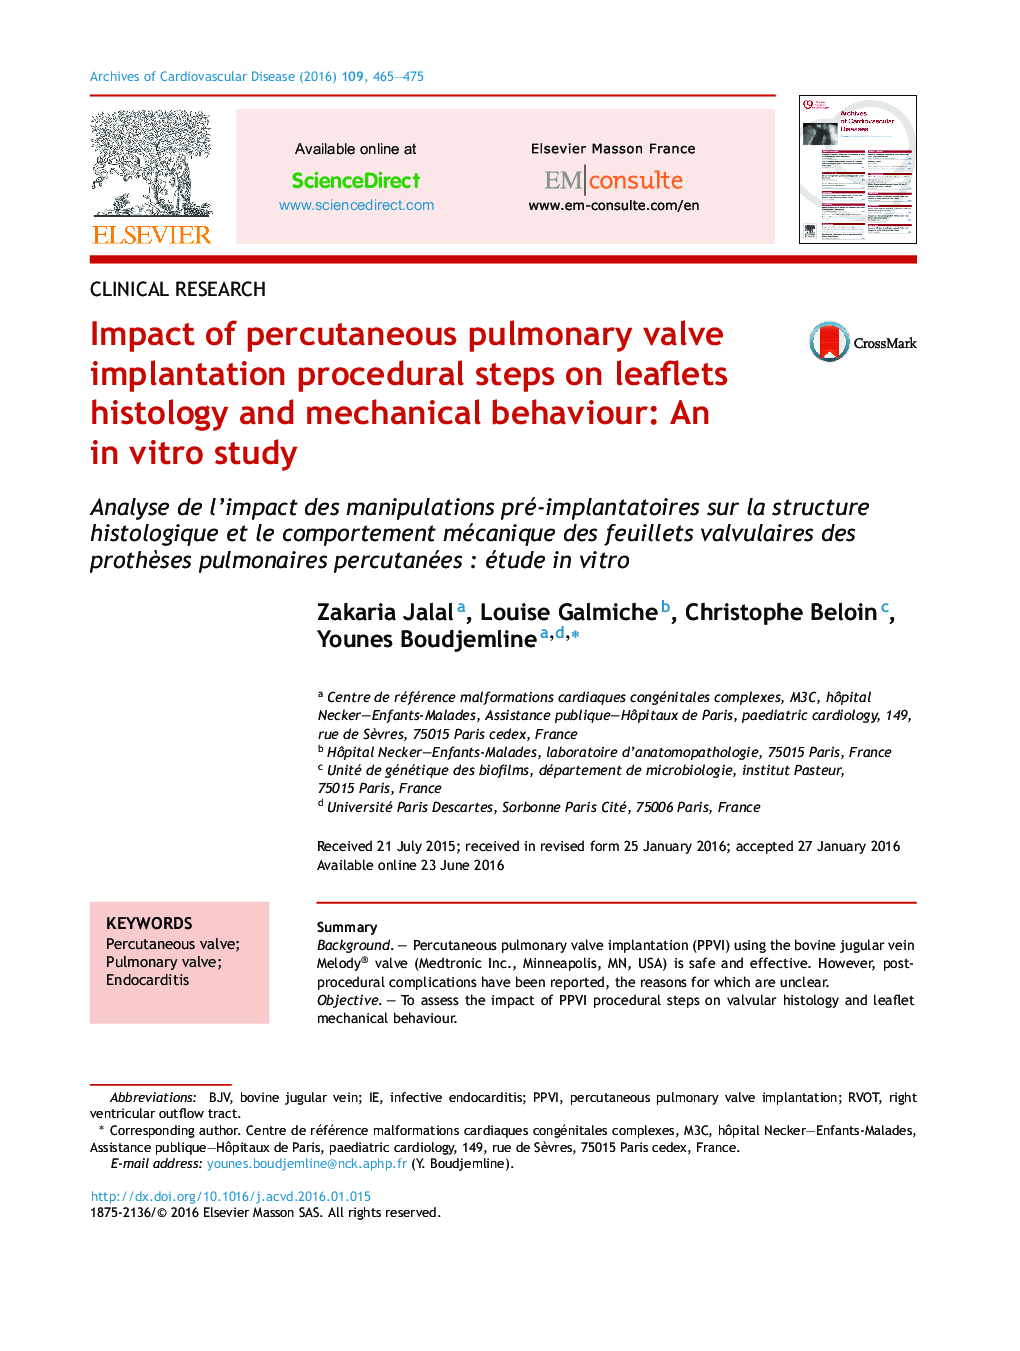 Impact of percutaneous pulmonary valve implantation procedural steps on leaflets histology and mechanical behaviour: An in vitro study